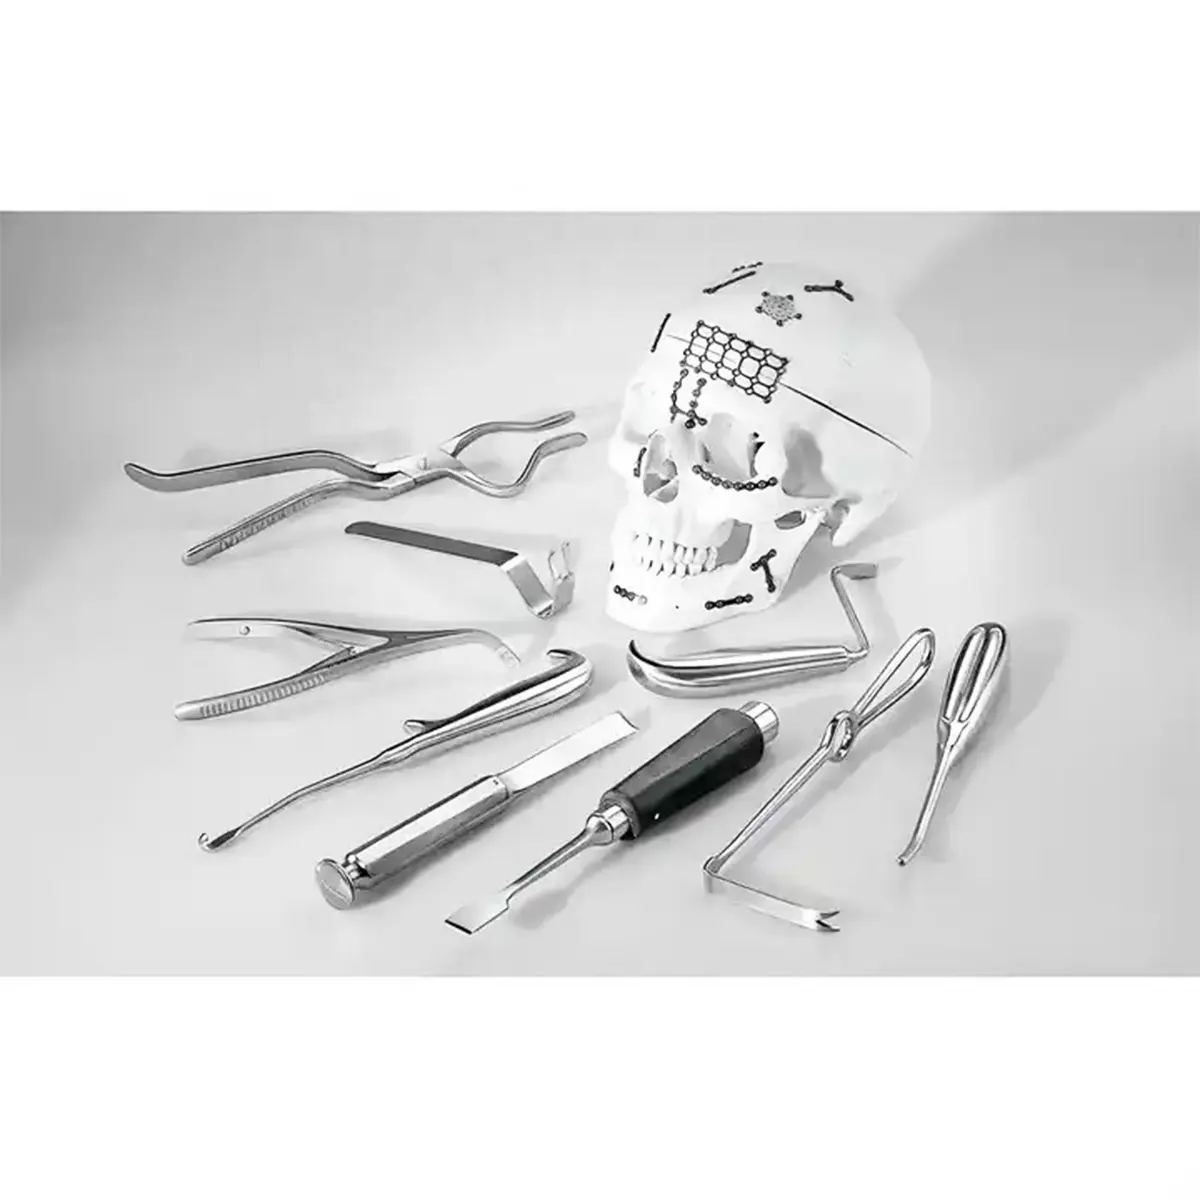 Best Quality Maxillofacial Plastic Instruments Kit Stainless Steel Maxillofacial Surgery Set